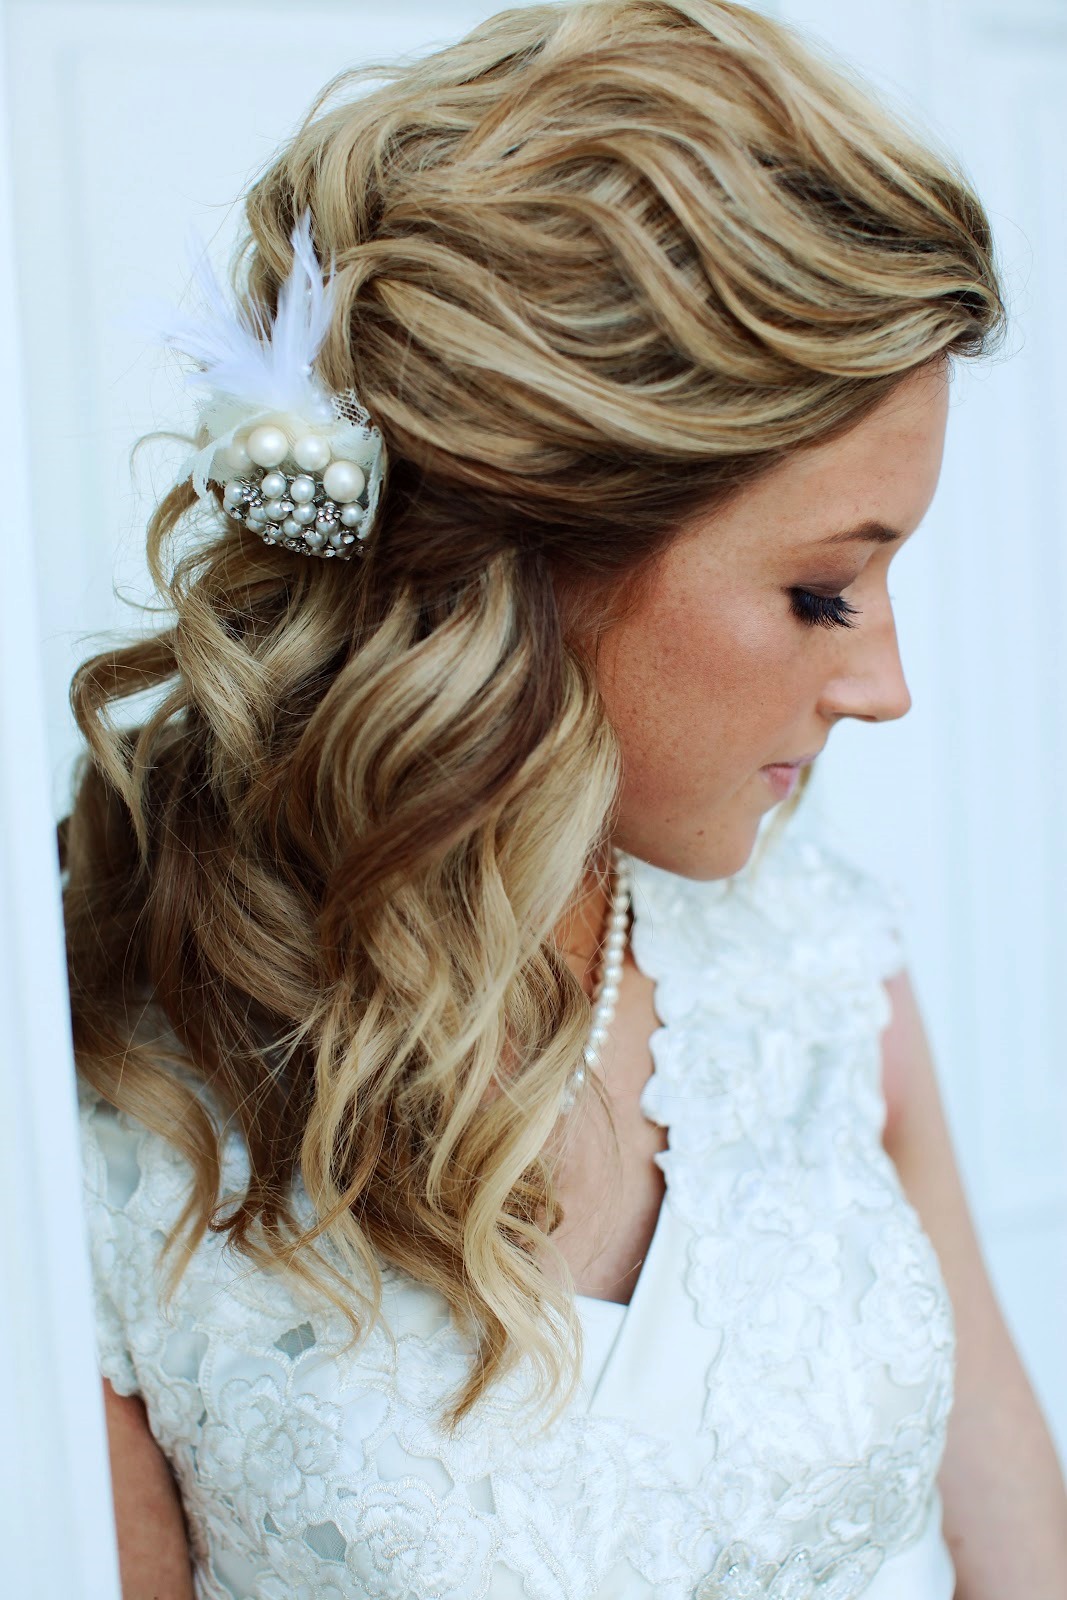 Greek Wedding Hairstyles With Bangs